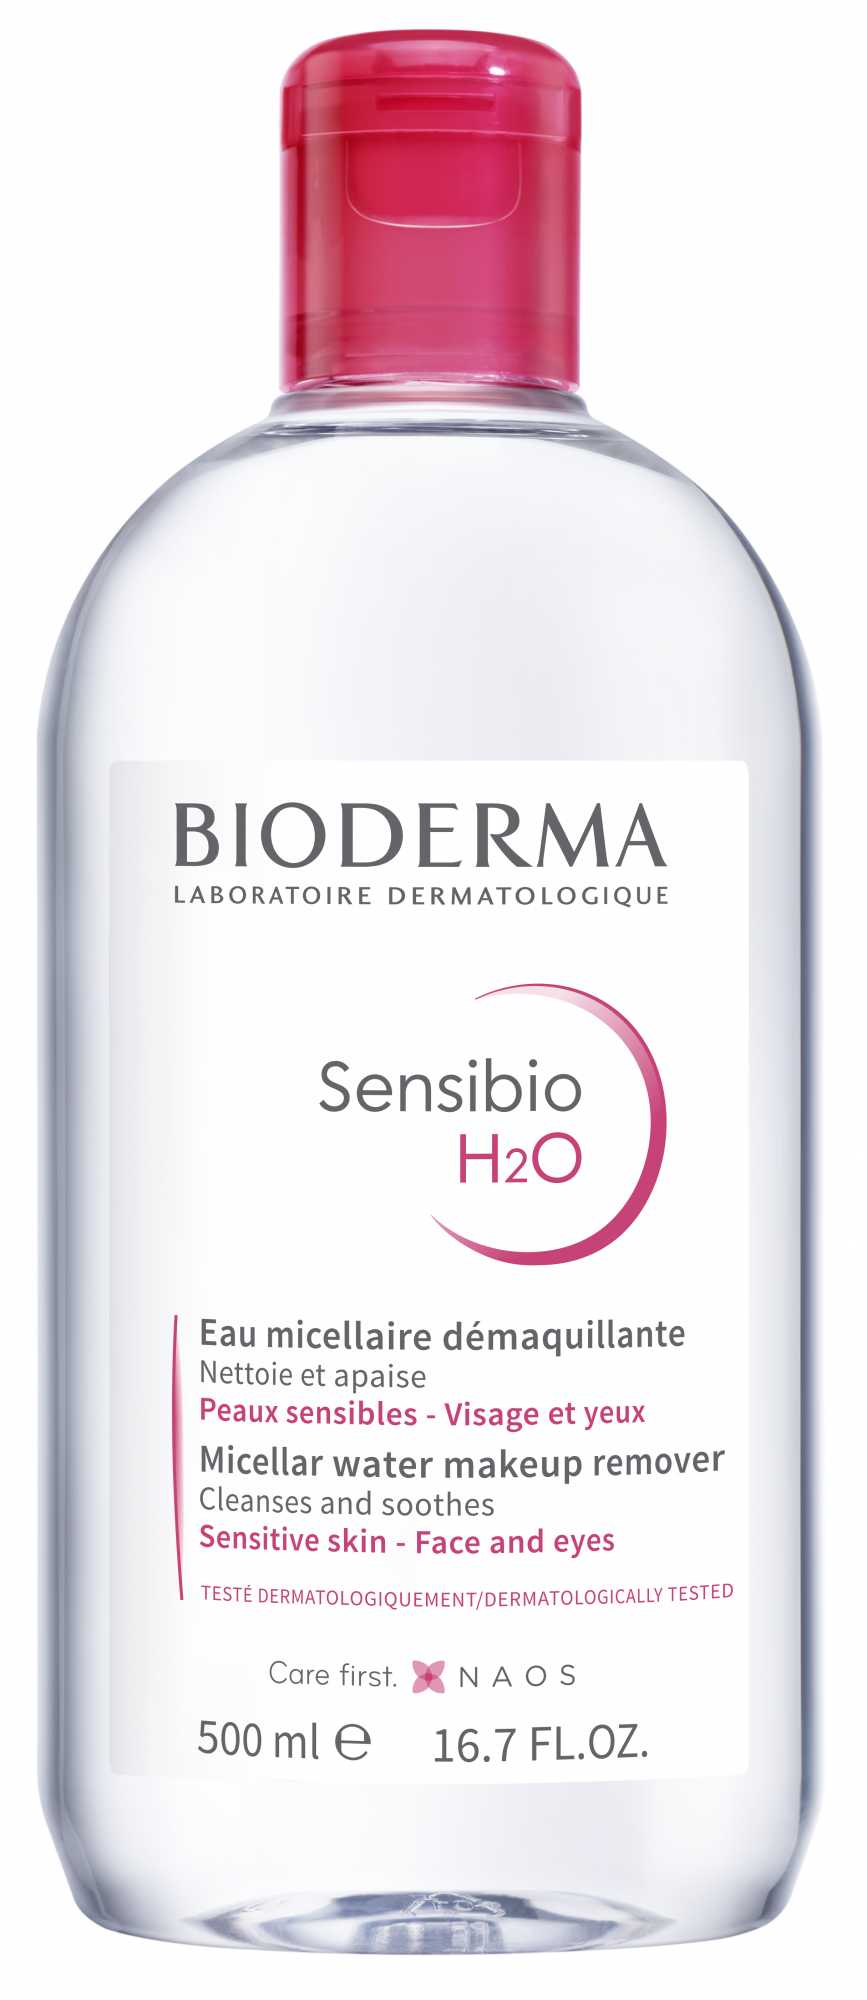 Desmaquillante Sensibio H2o Eye 125 ml Bioderma